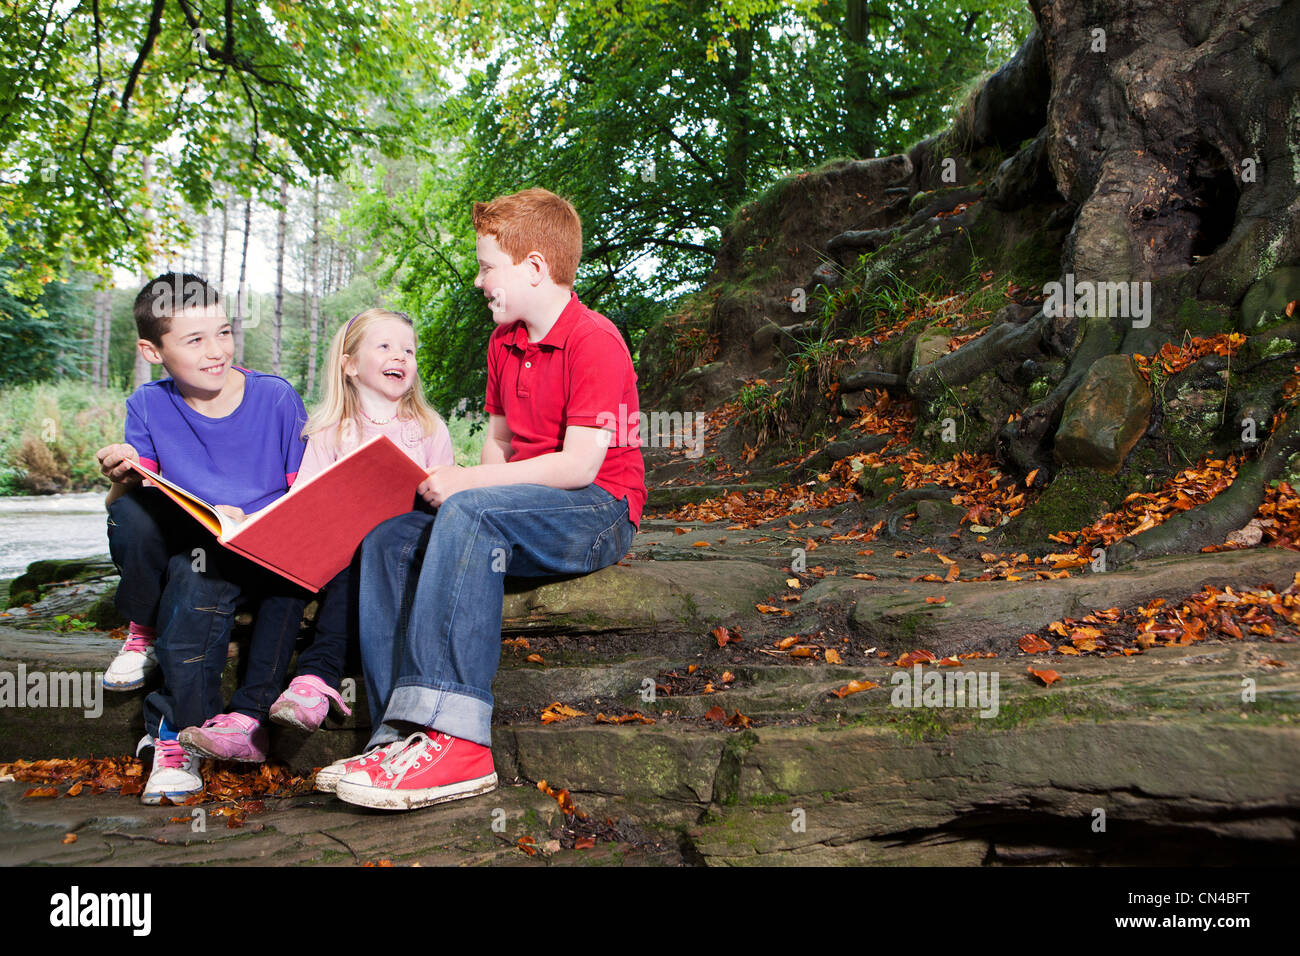 Three children enjoying a book together Stock Photo